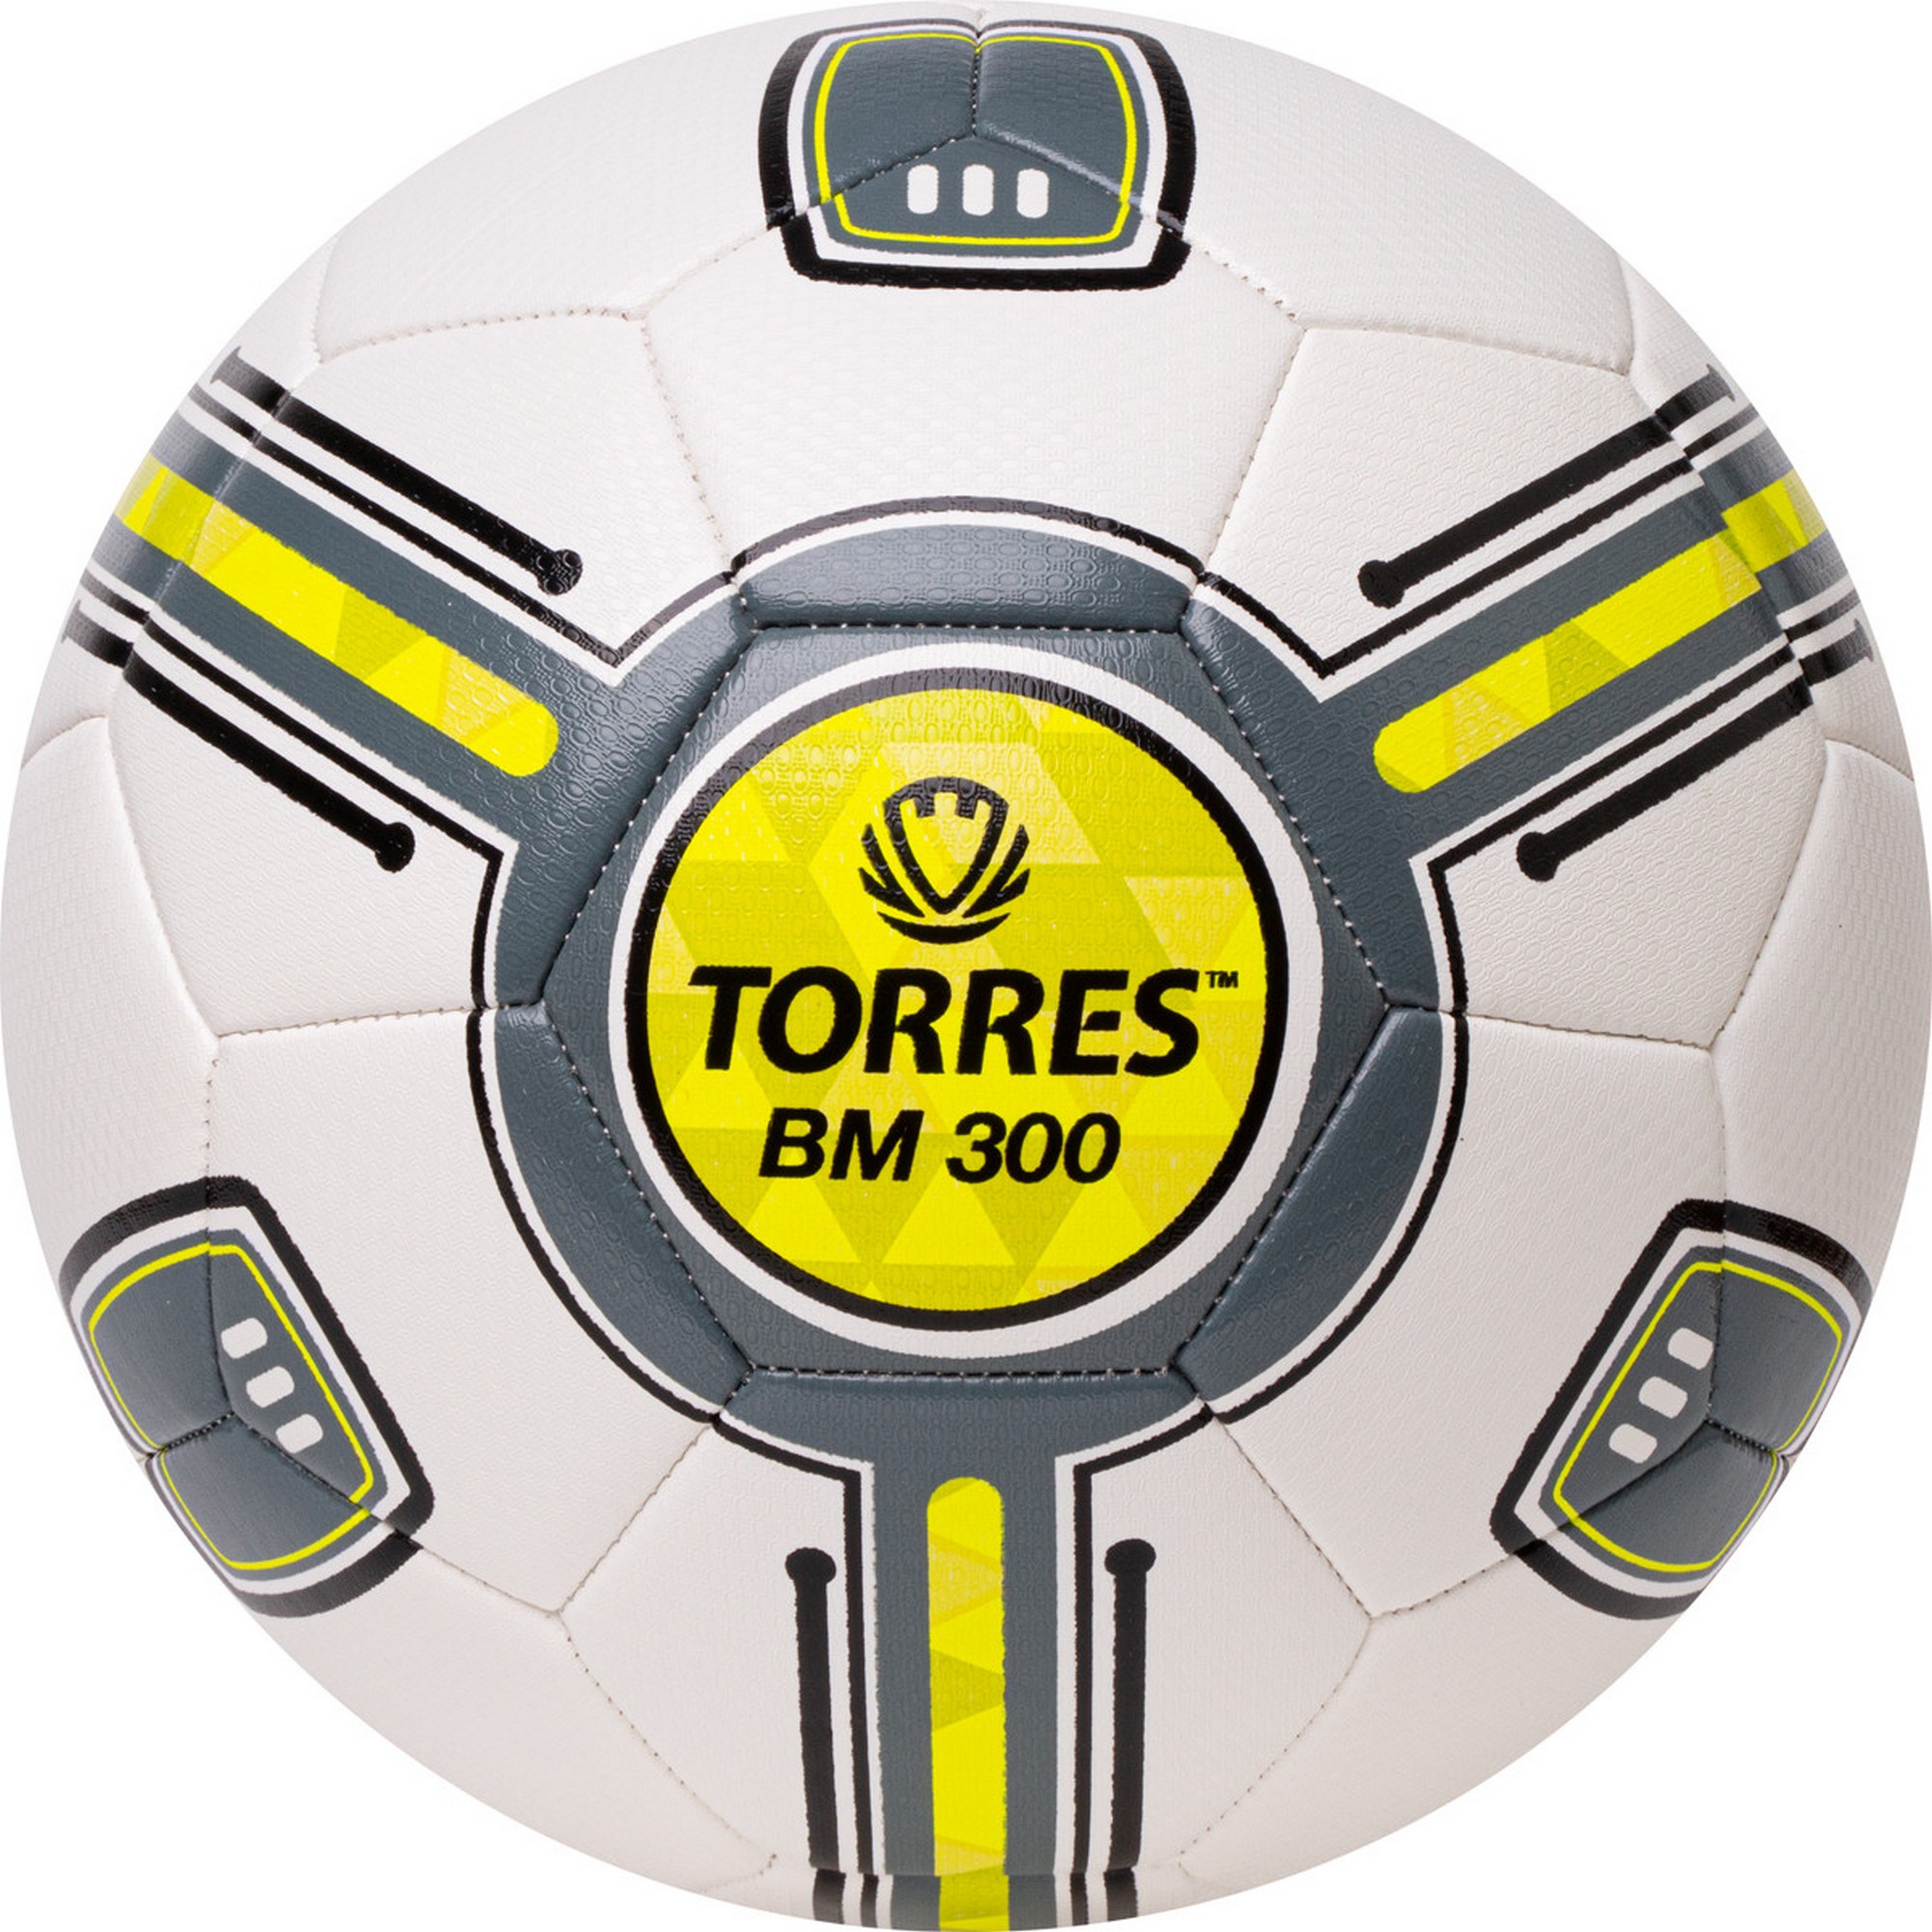   Torres BM 300 F323654 .4